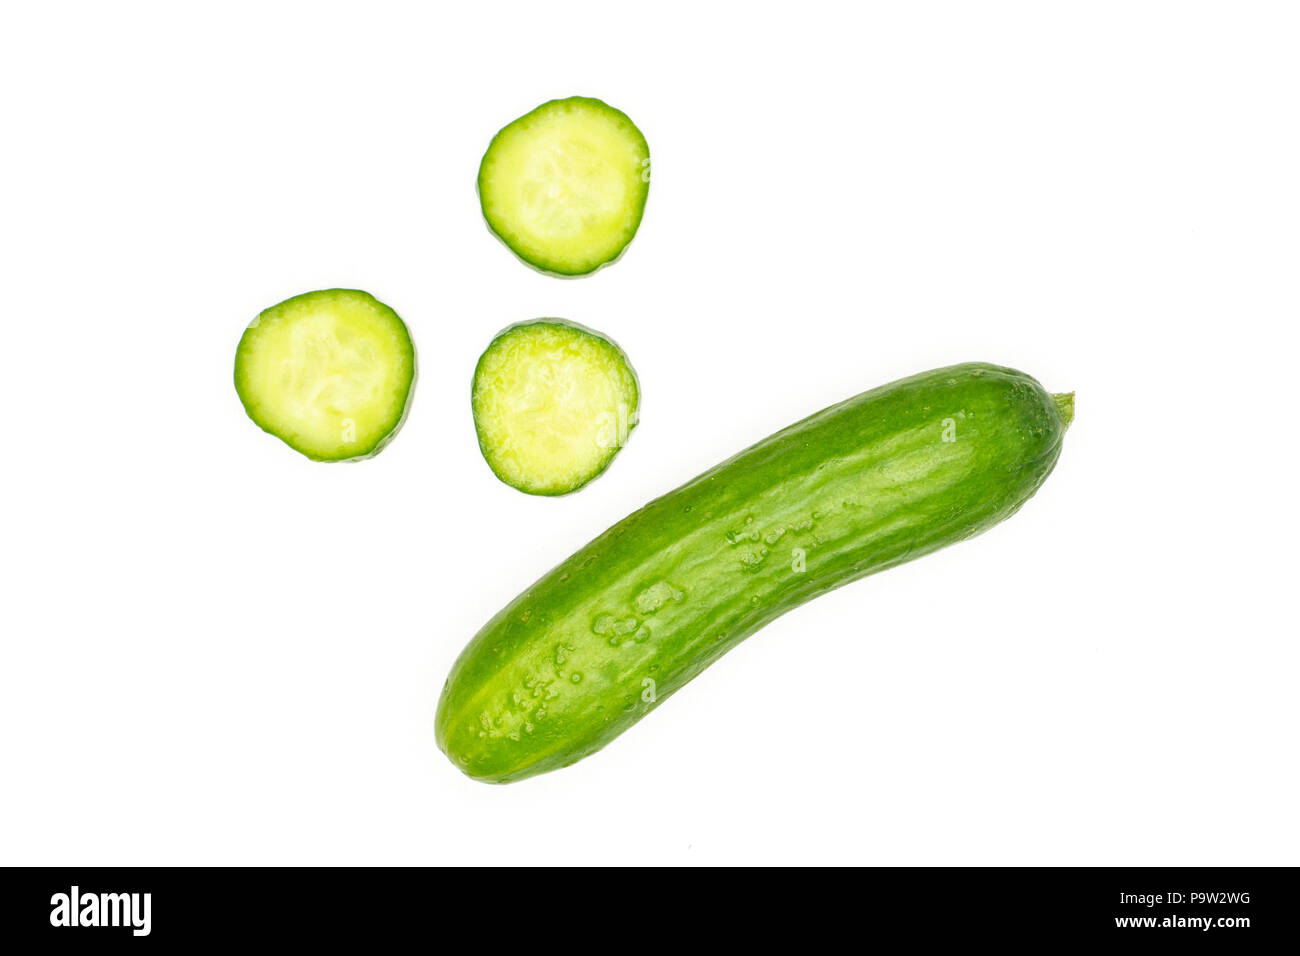 https://c8.alamy.com/comp/P9W2WG/one-fresh-mini-cucumber-and-three-round-slices-flatlay-isolated-on-white-background-P9W2WG.jpg